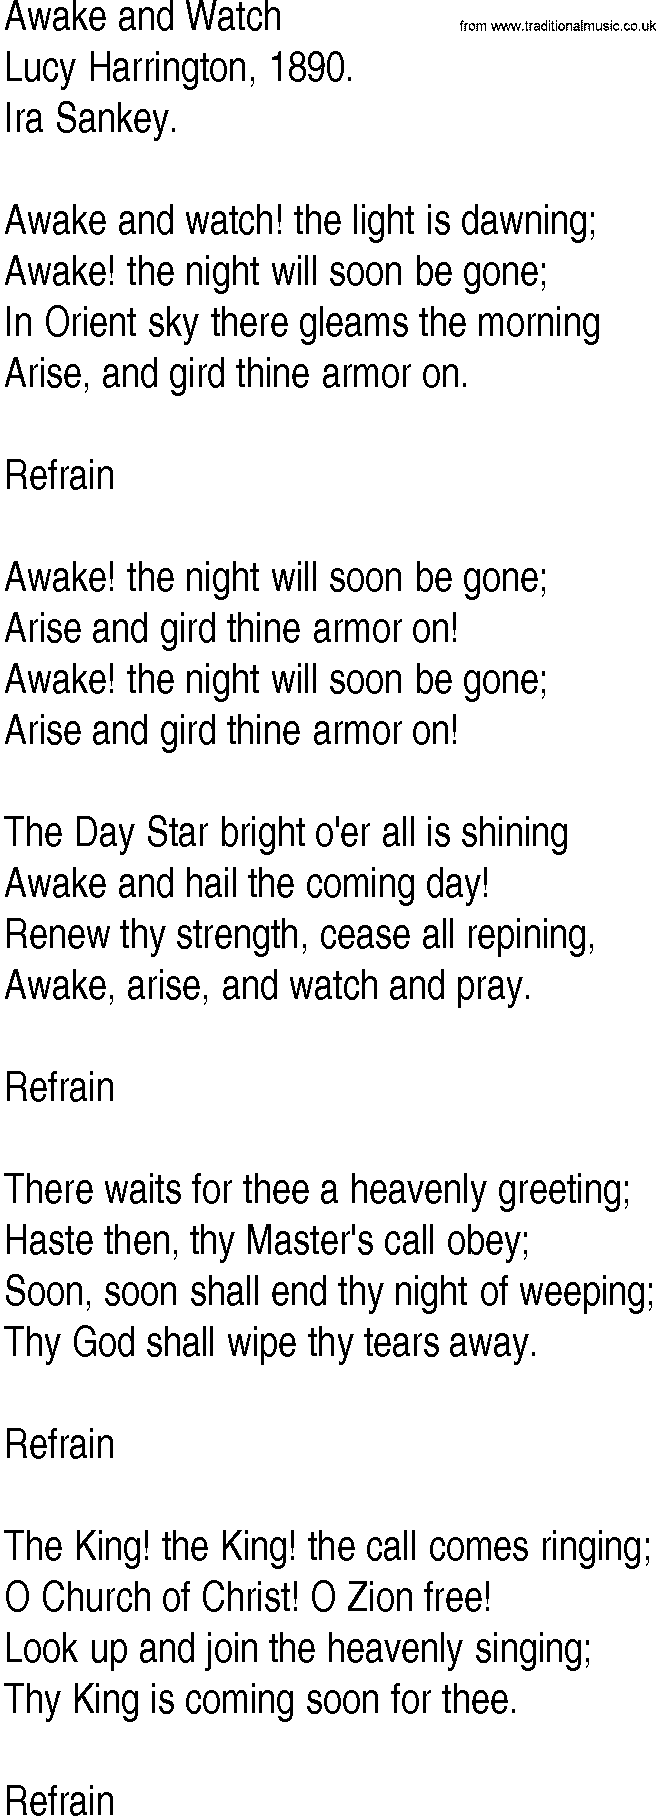 Hymn and Gospel Song: Awake and Watch by Lucy Harrington lyrics